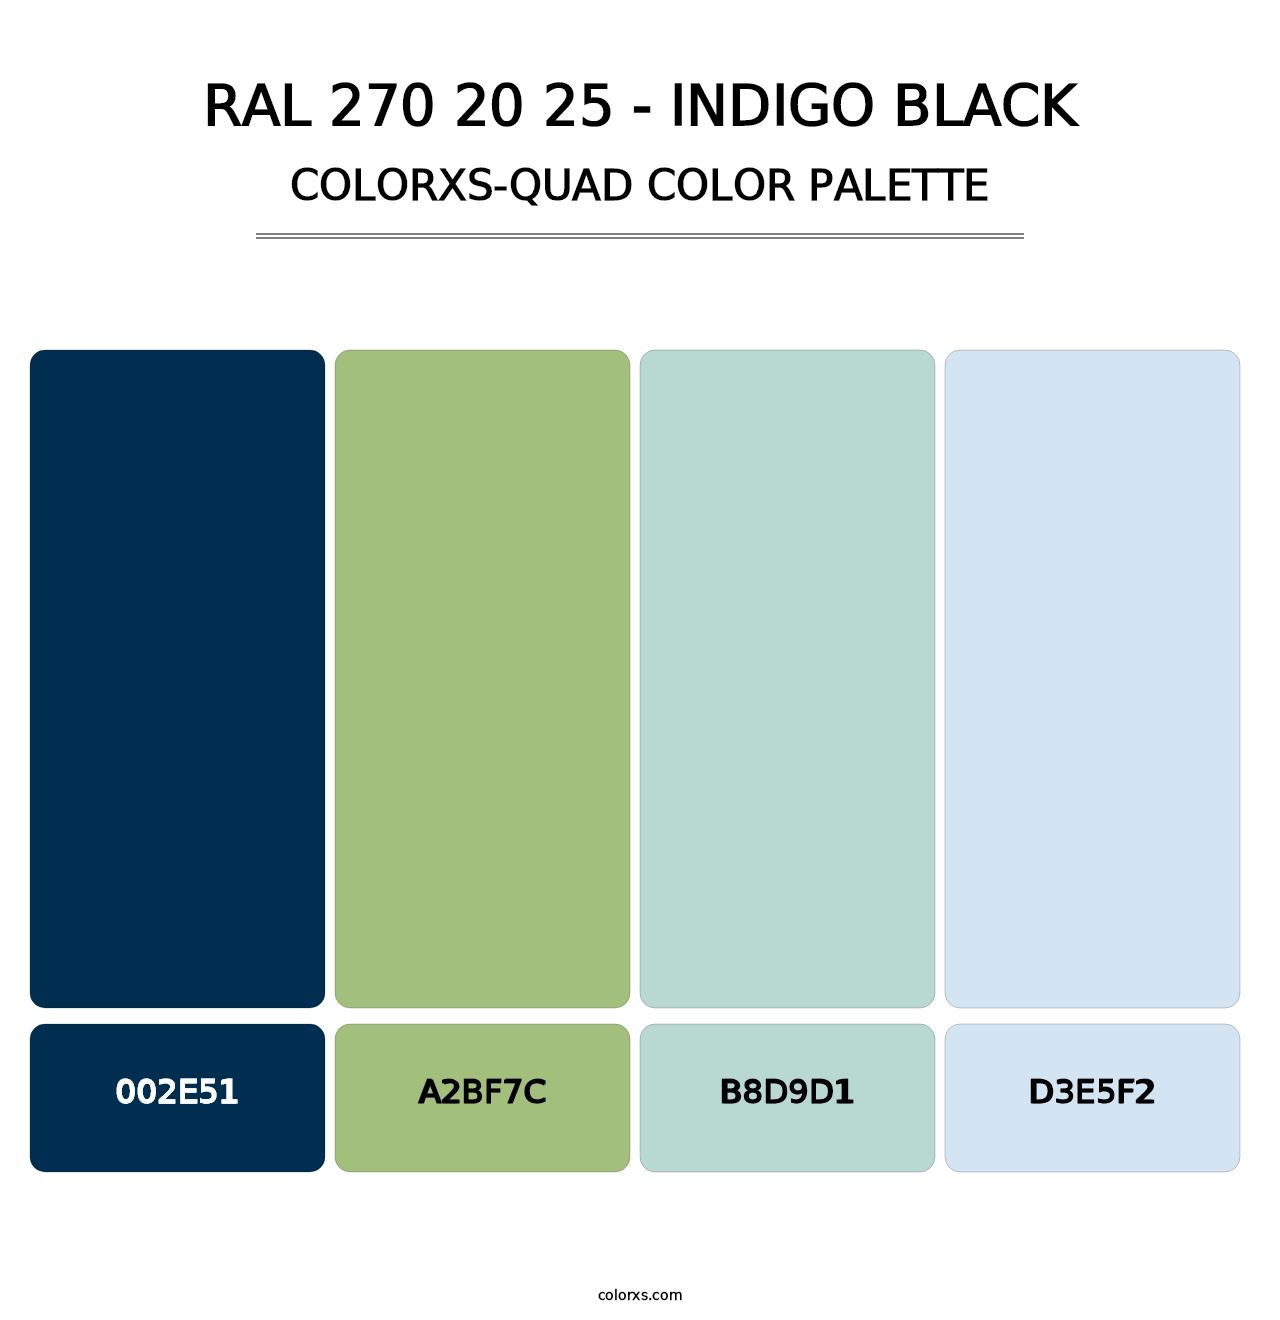 RAL 270 20 25 - Indigo Black - Colorxs Quad Palette